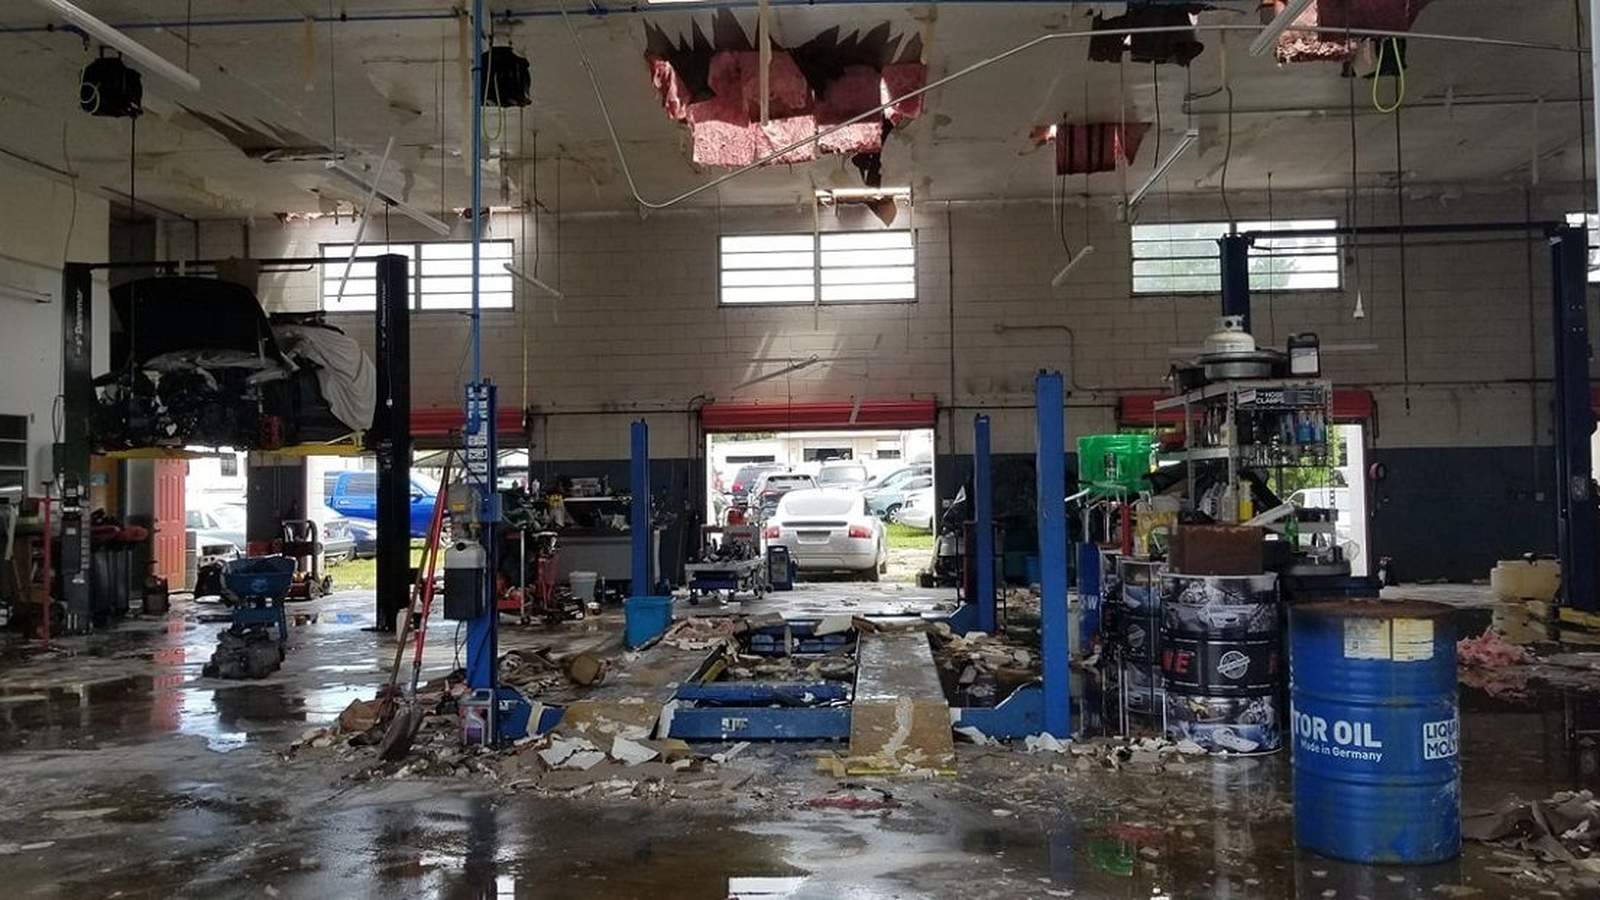 ‘It’s like a war zone:’ DeLand businesses reeling from tornado damage